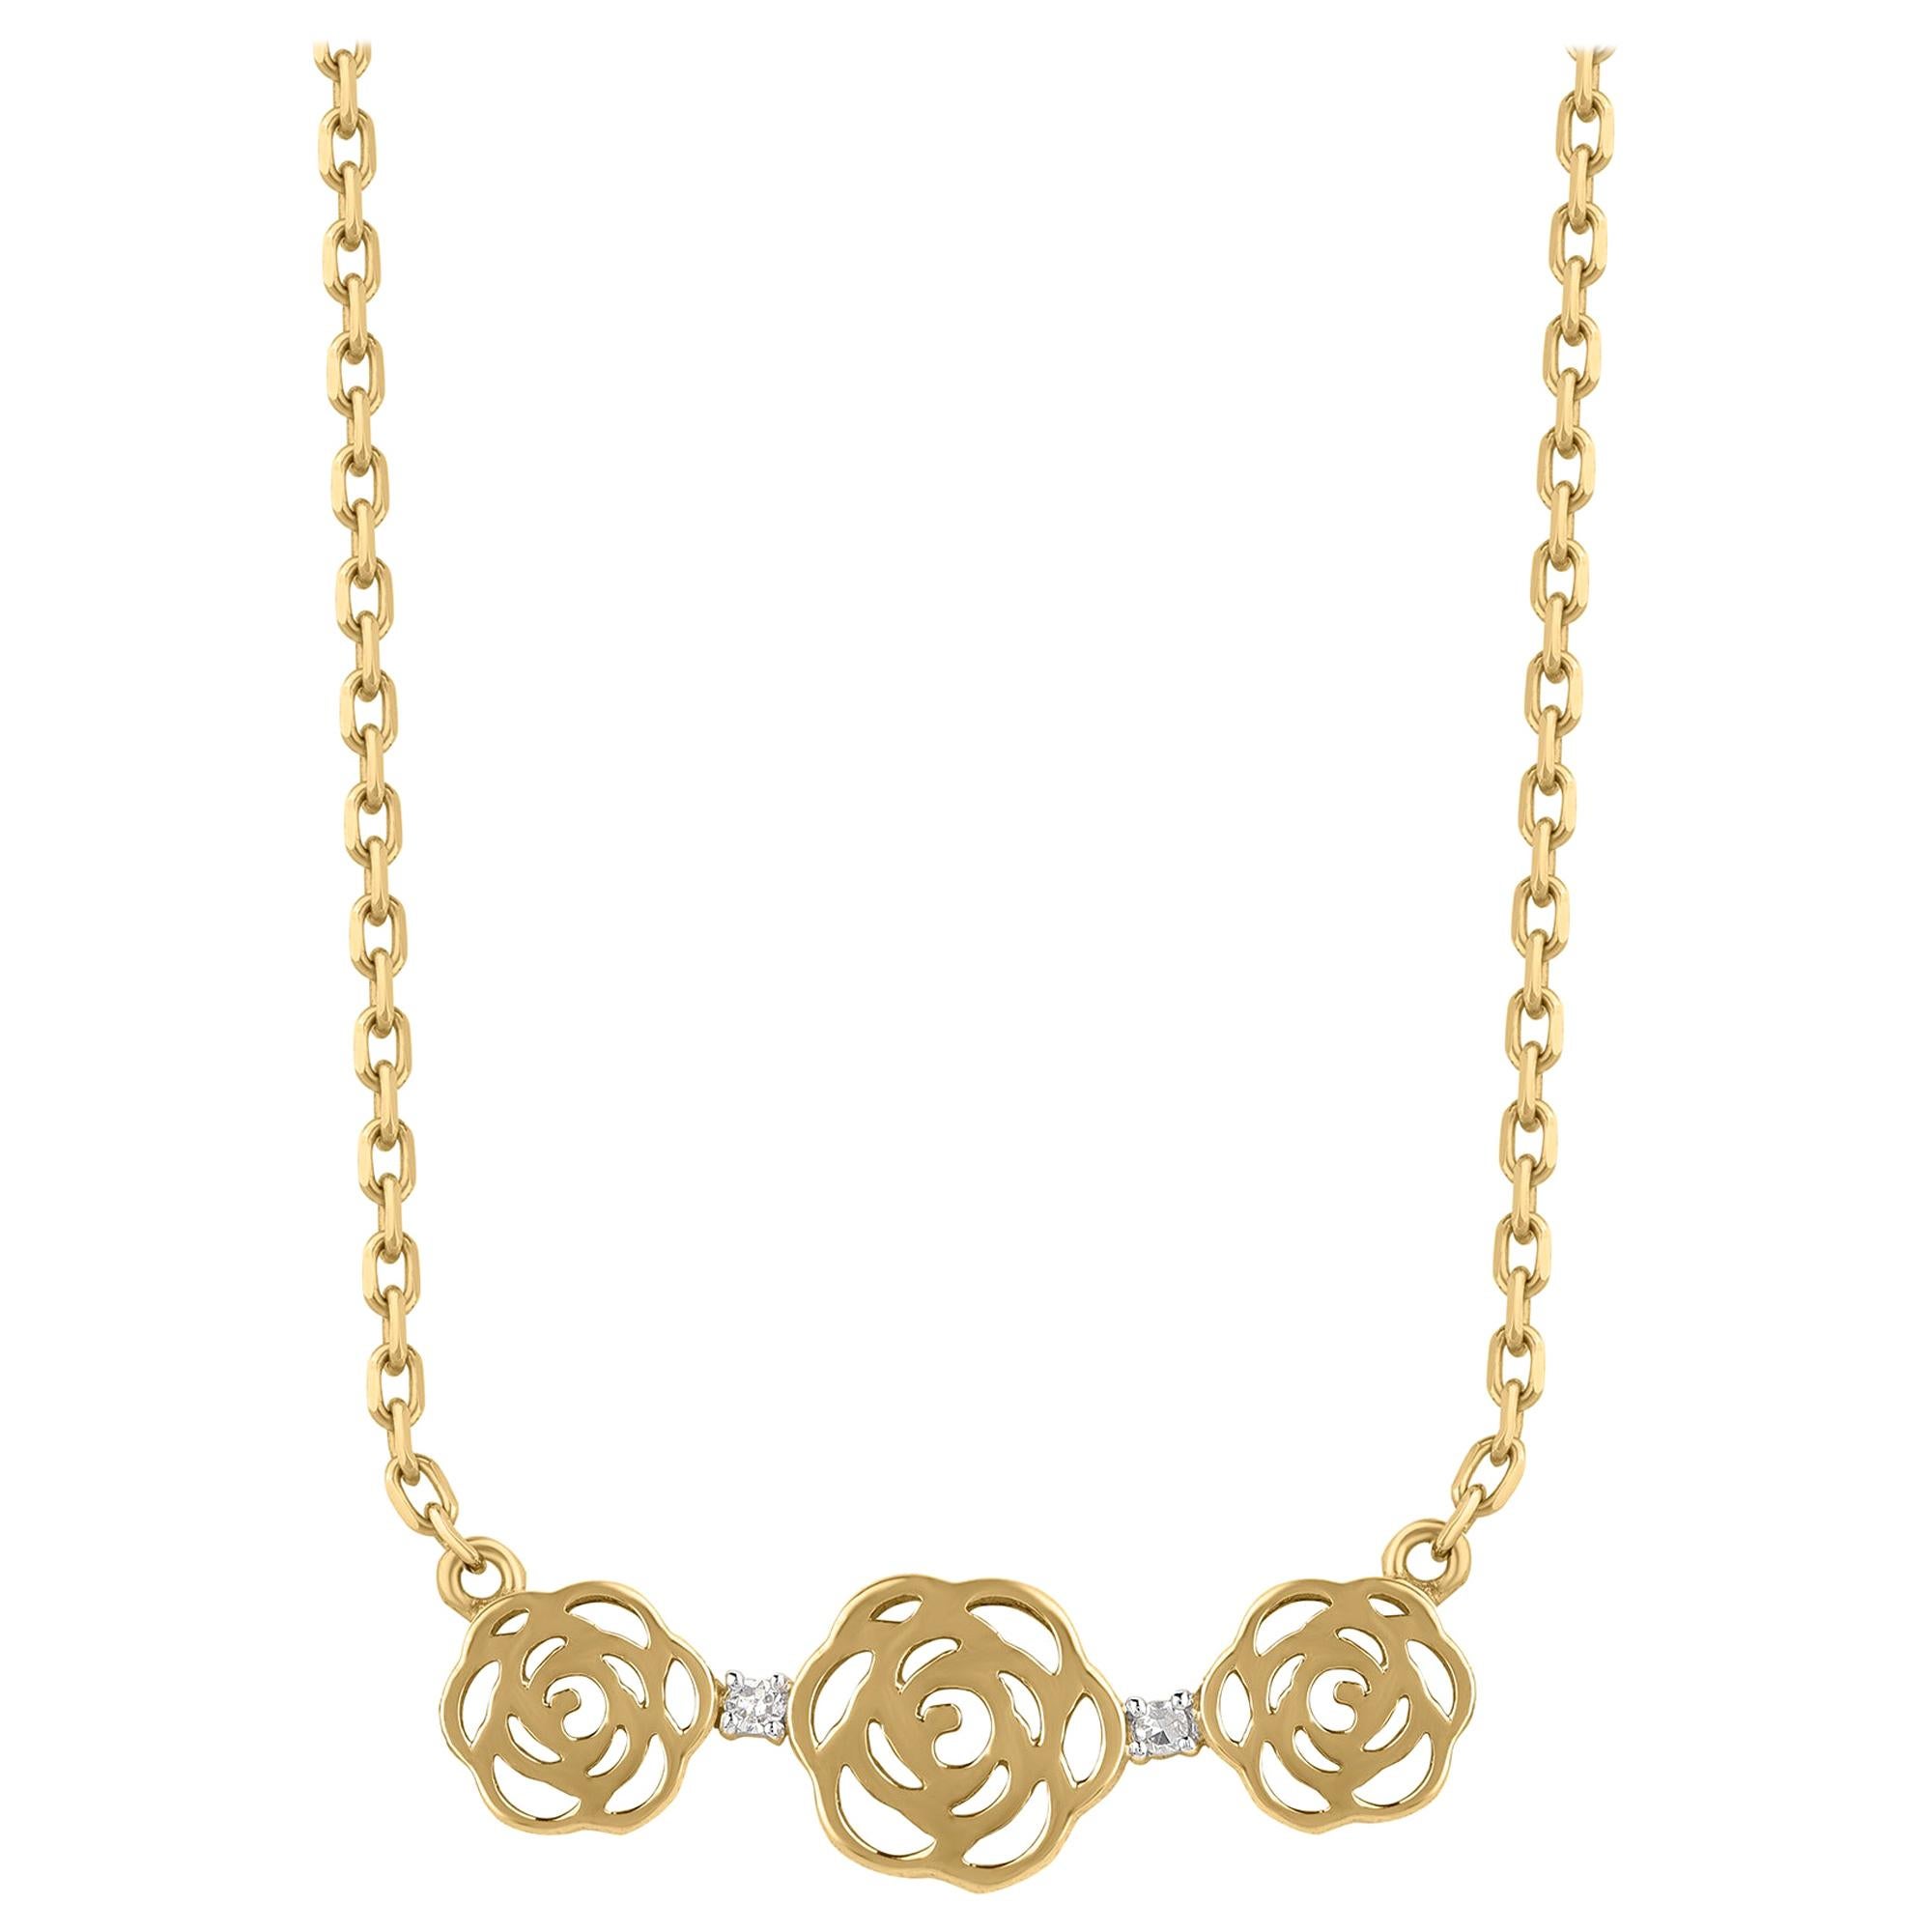 TJD 0.015 Carat Diamond 18Karat Yellow Gold Fashion Necklace with 18 inch Chain